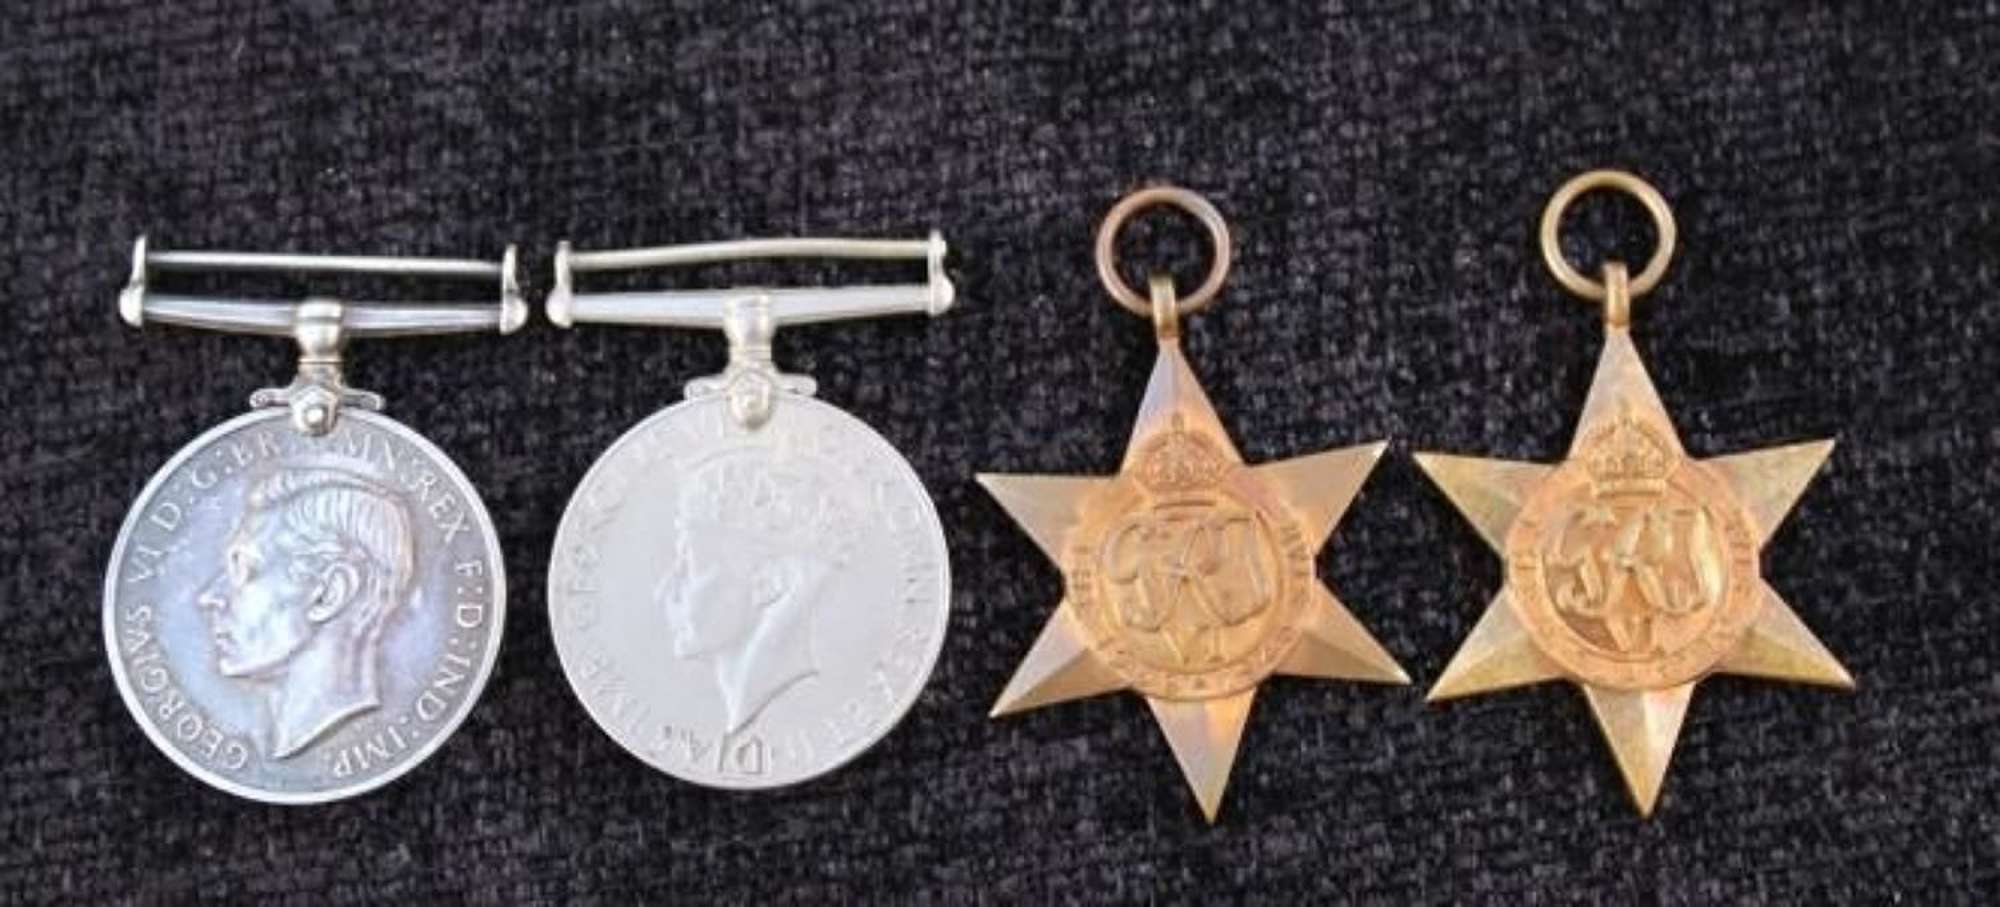 WW2 Naval LSGC Medal Group